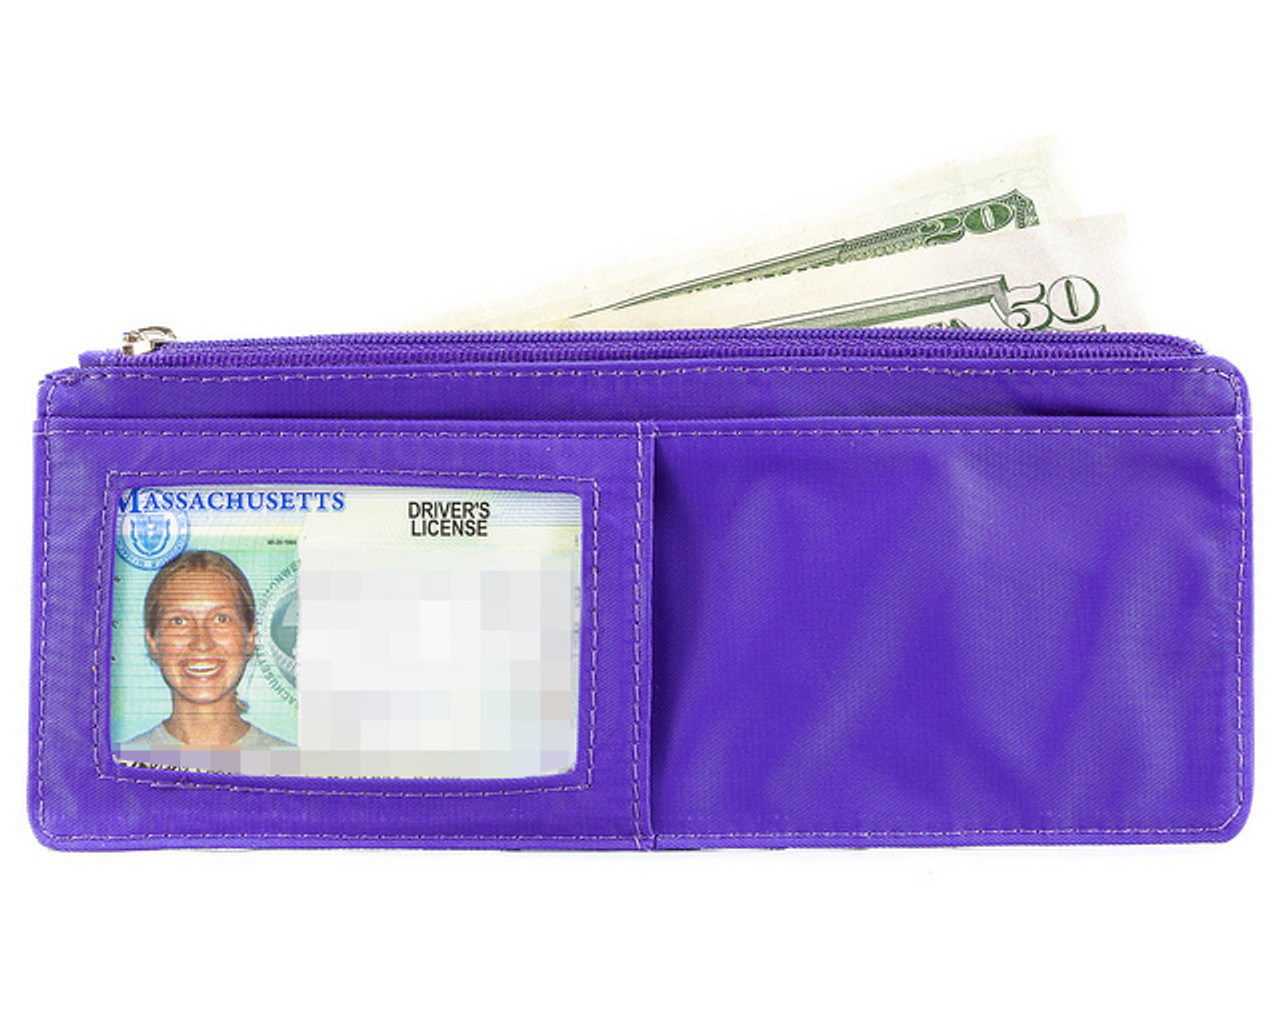 Durable Plastic Credit Card Size Wallet Key Hider